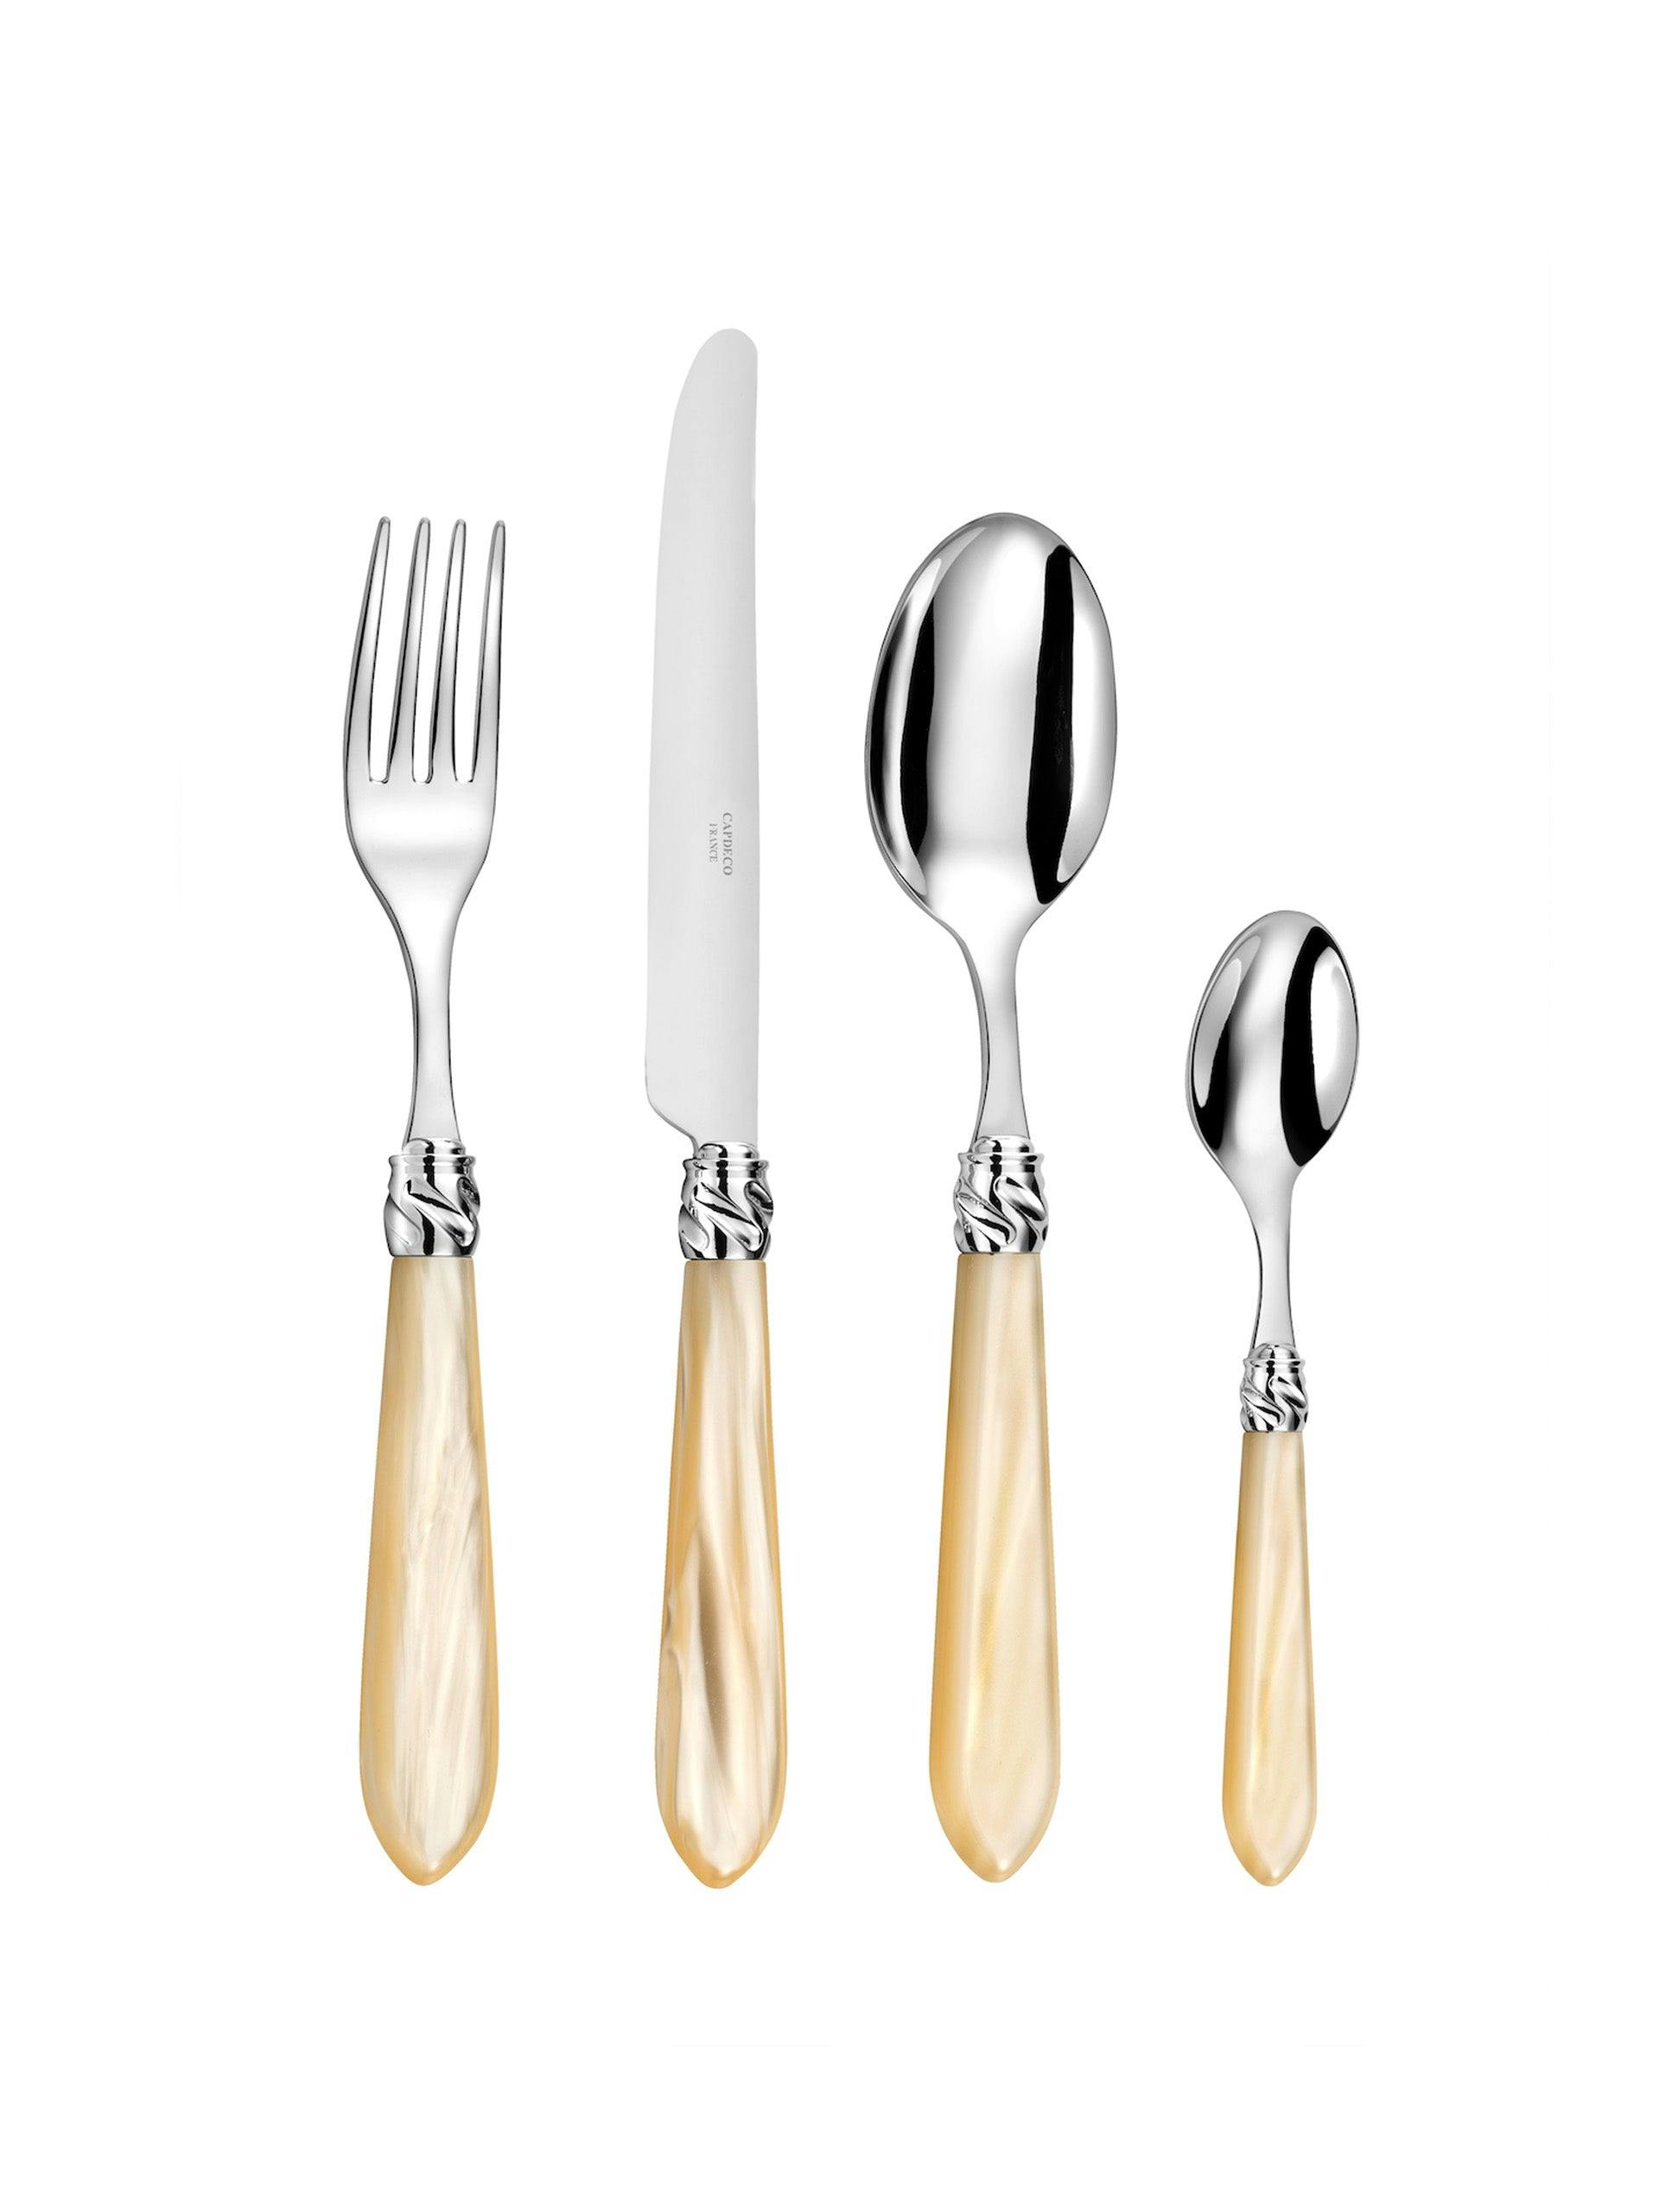 Pearl cutlery set